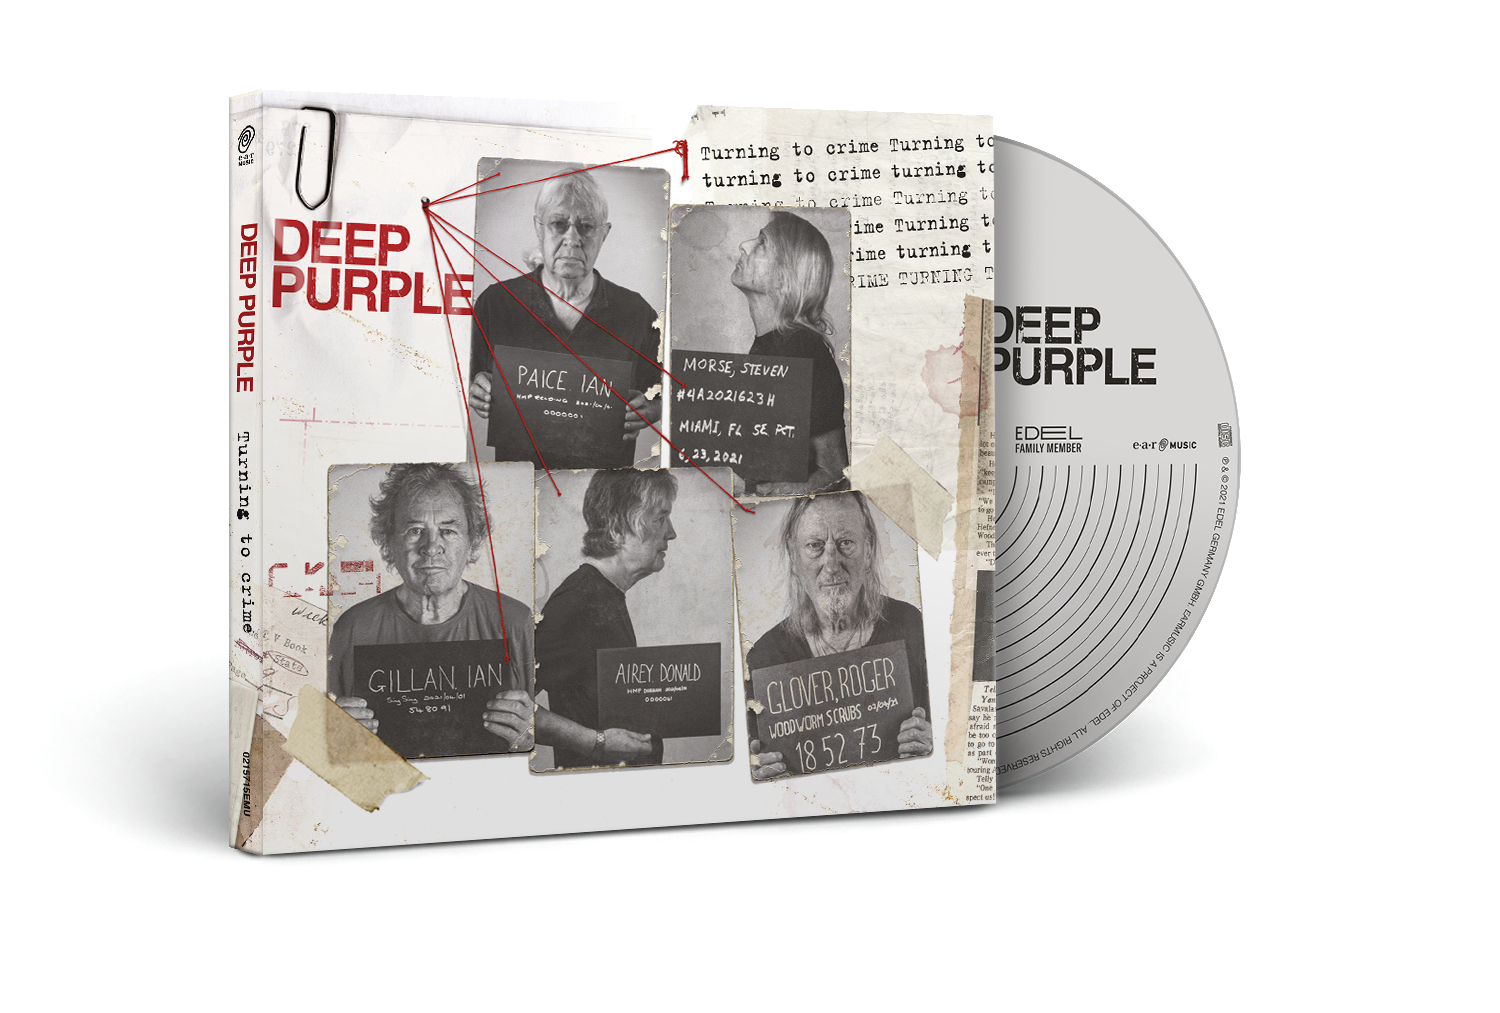 (CD) To (Digipak) Purple Crime Turning Deep - -